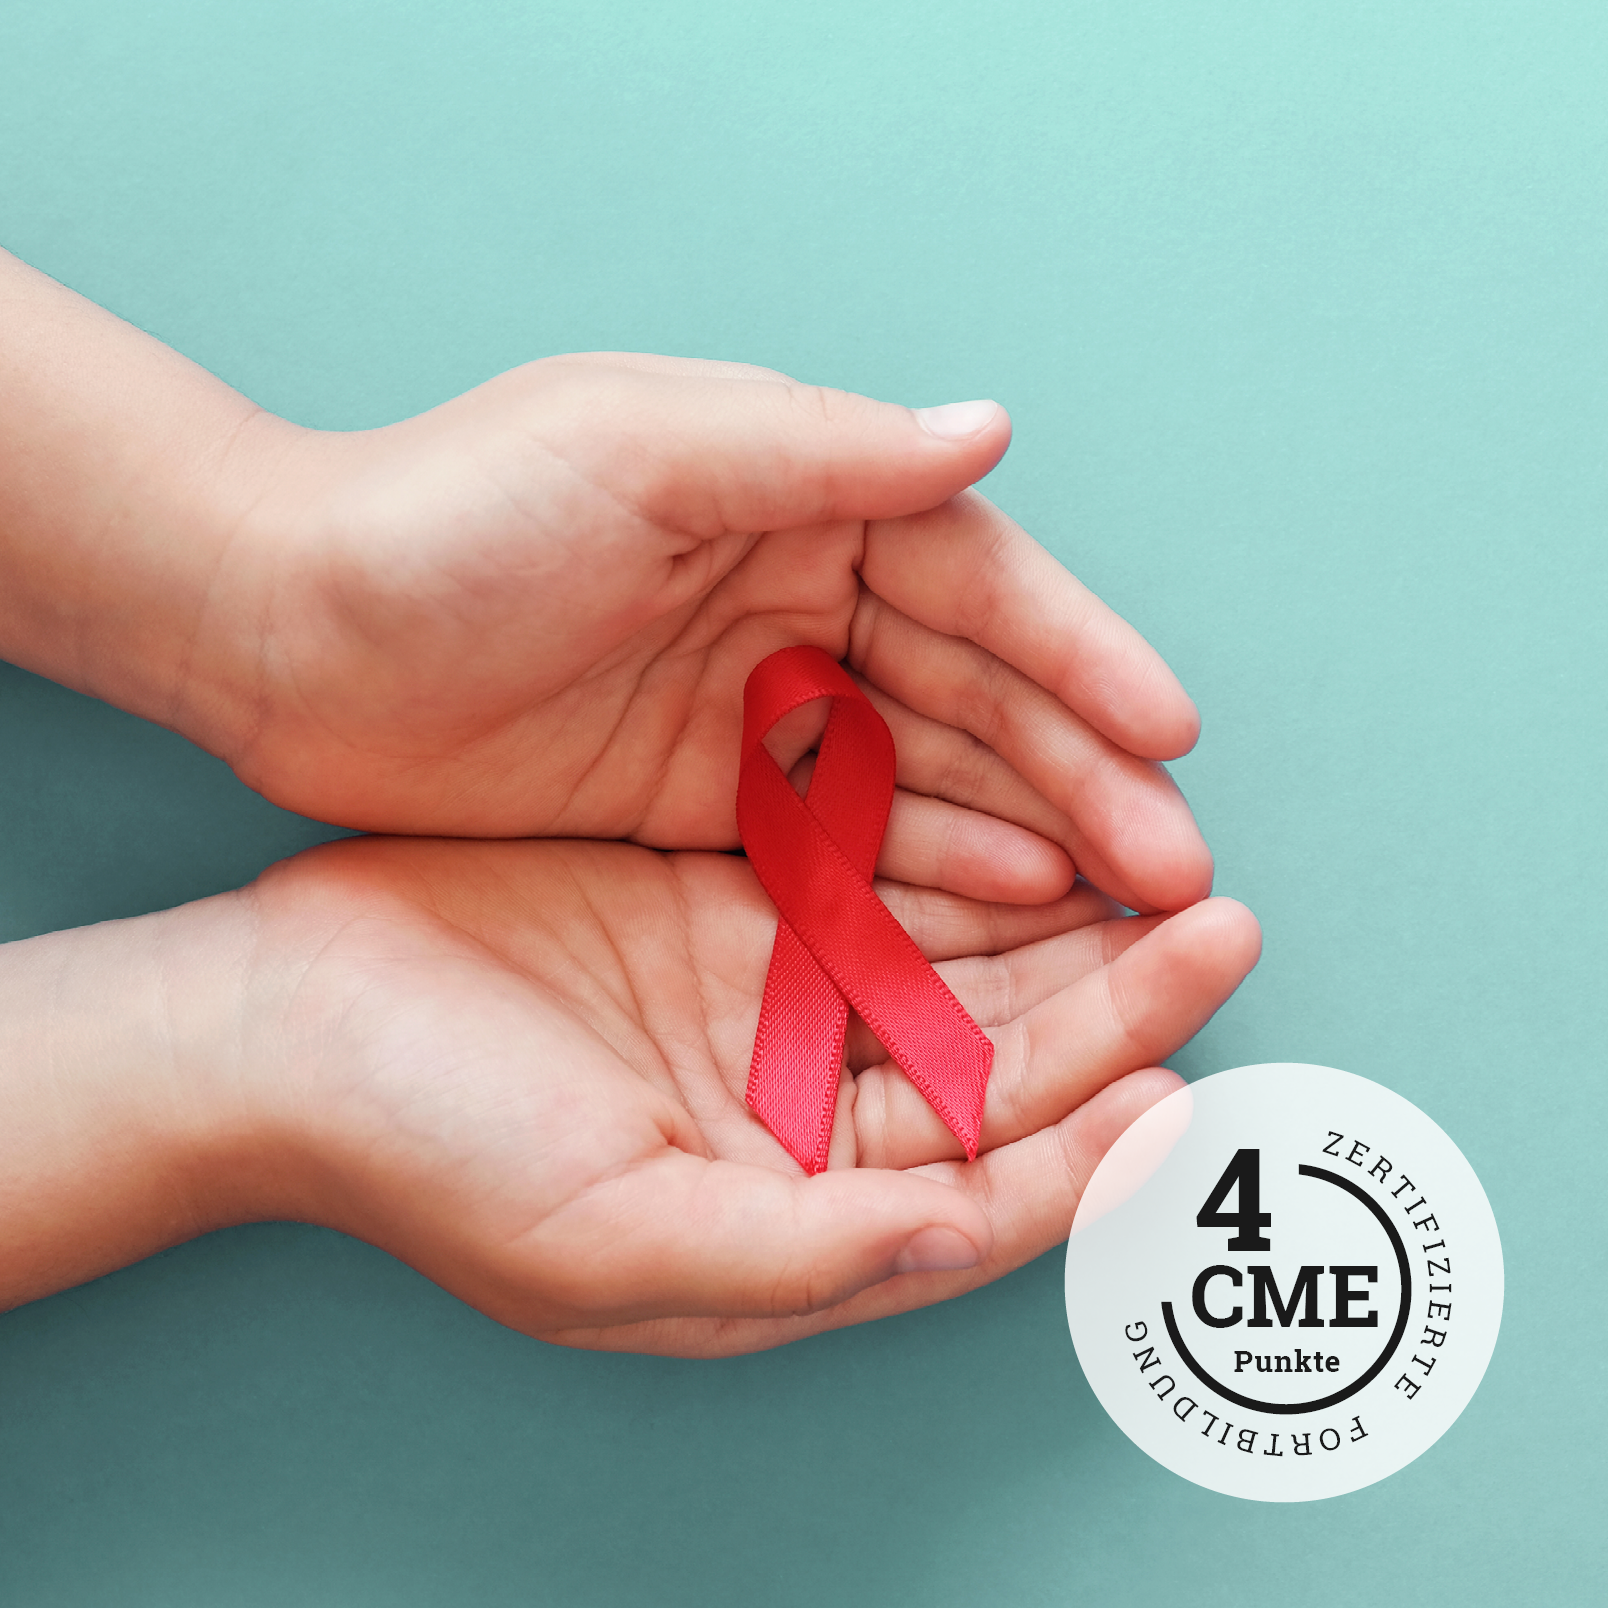 CME zu HIV in der Urologie